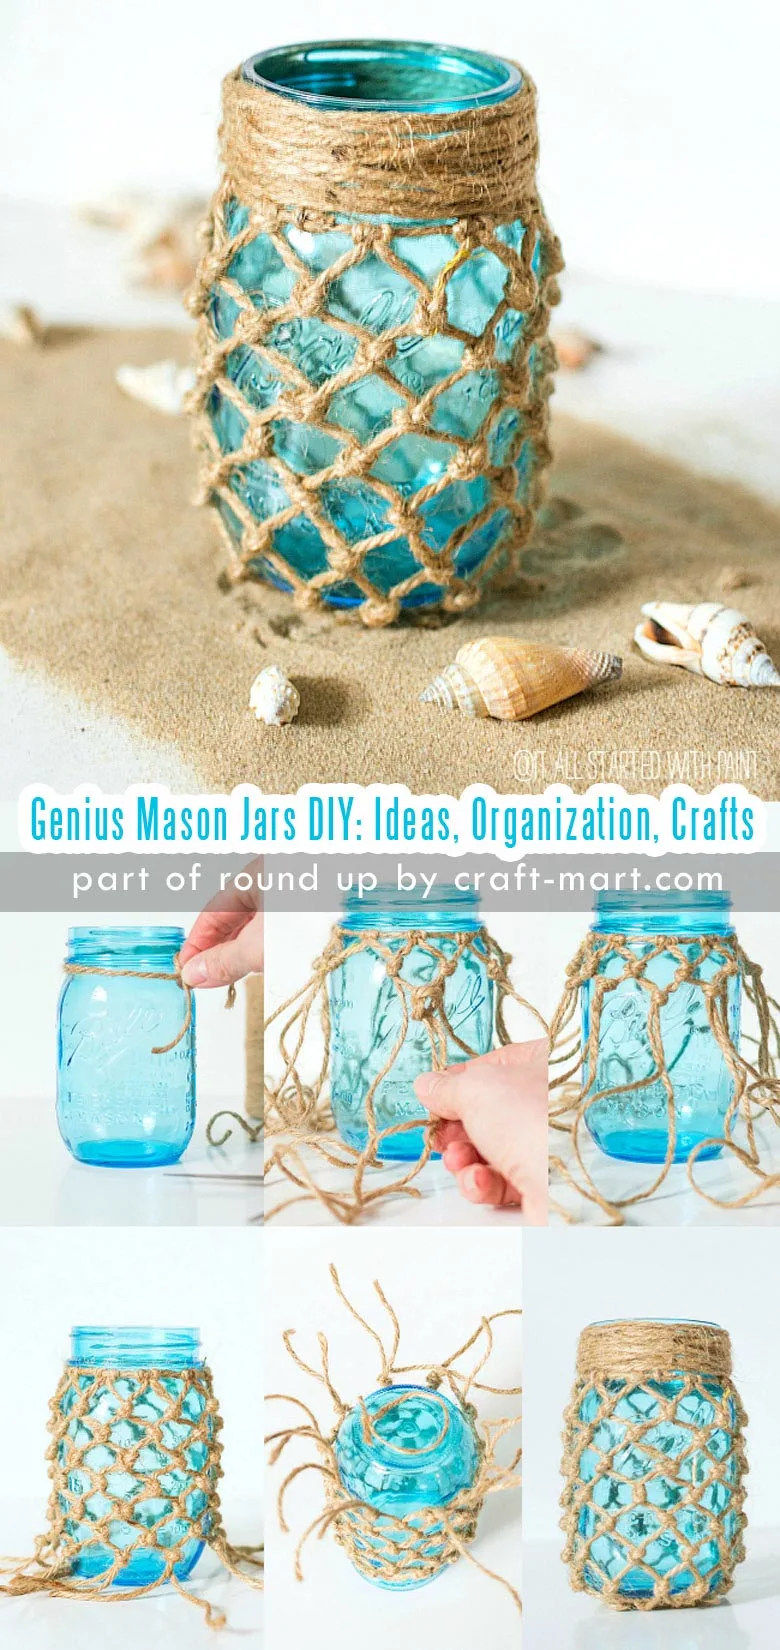 Genius Mason Jars DIY: Ideas, Organization, Crafts collection by craft-mart.com DIY Coastal Theme Fishnet Mason Jar #masonjars #masonjarsdiy #diyprojects #masonjarsdecor #masonjarscrafts